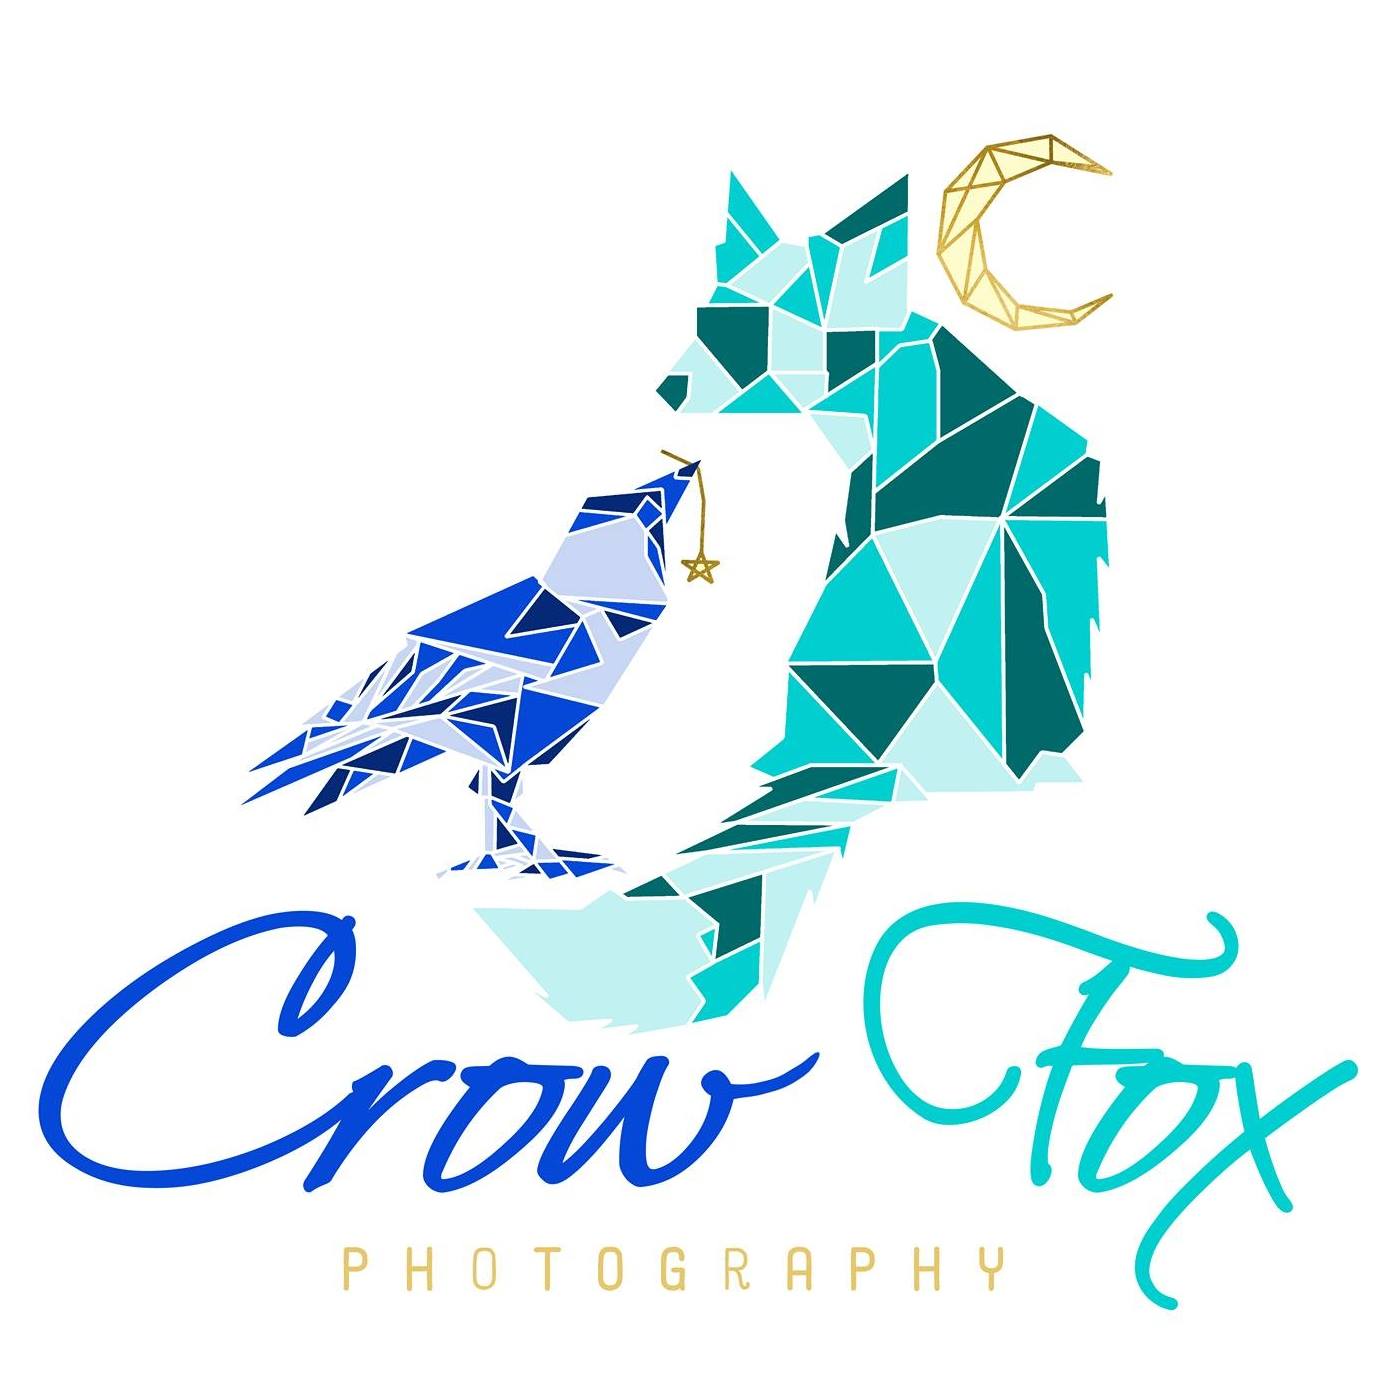 Business logo of Crow Fox Photography